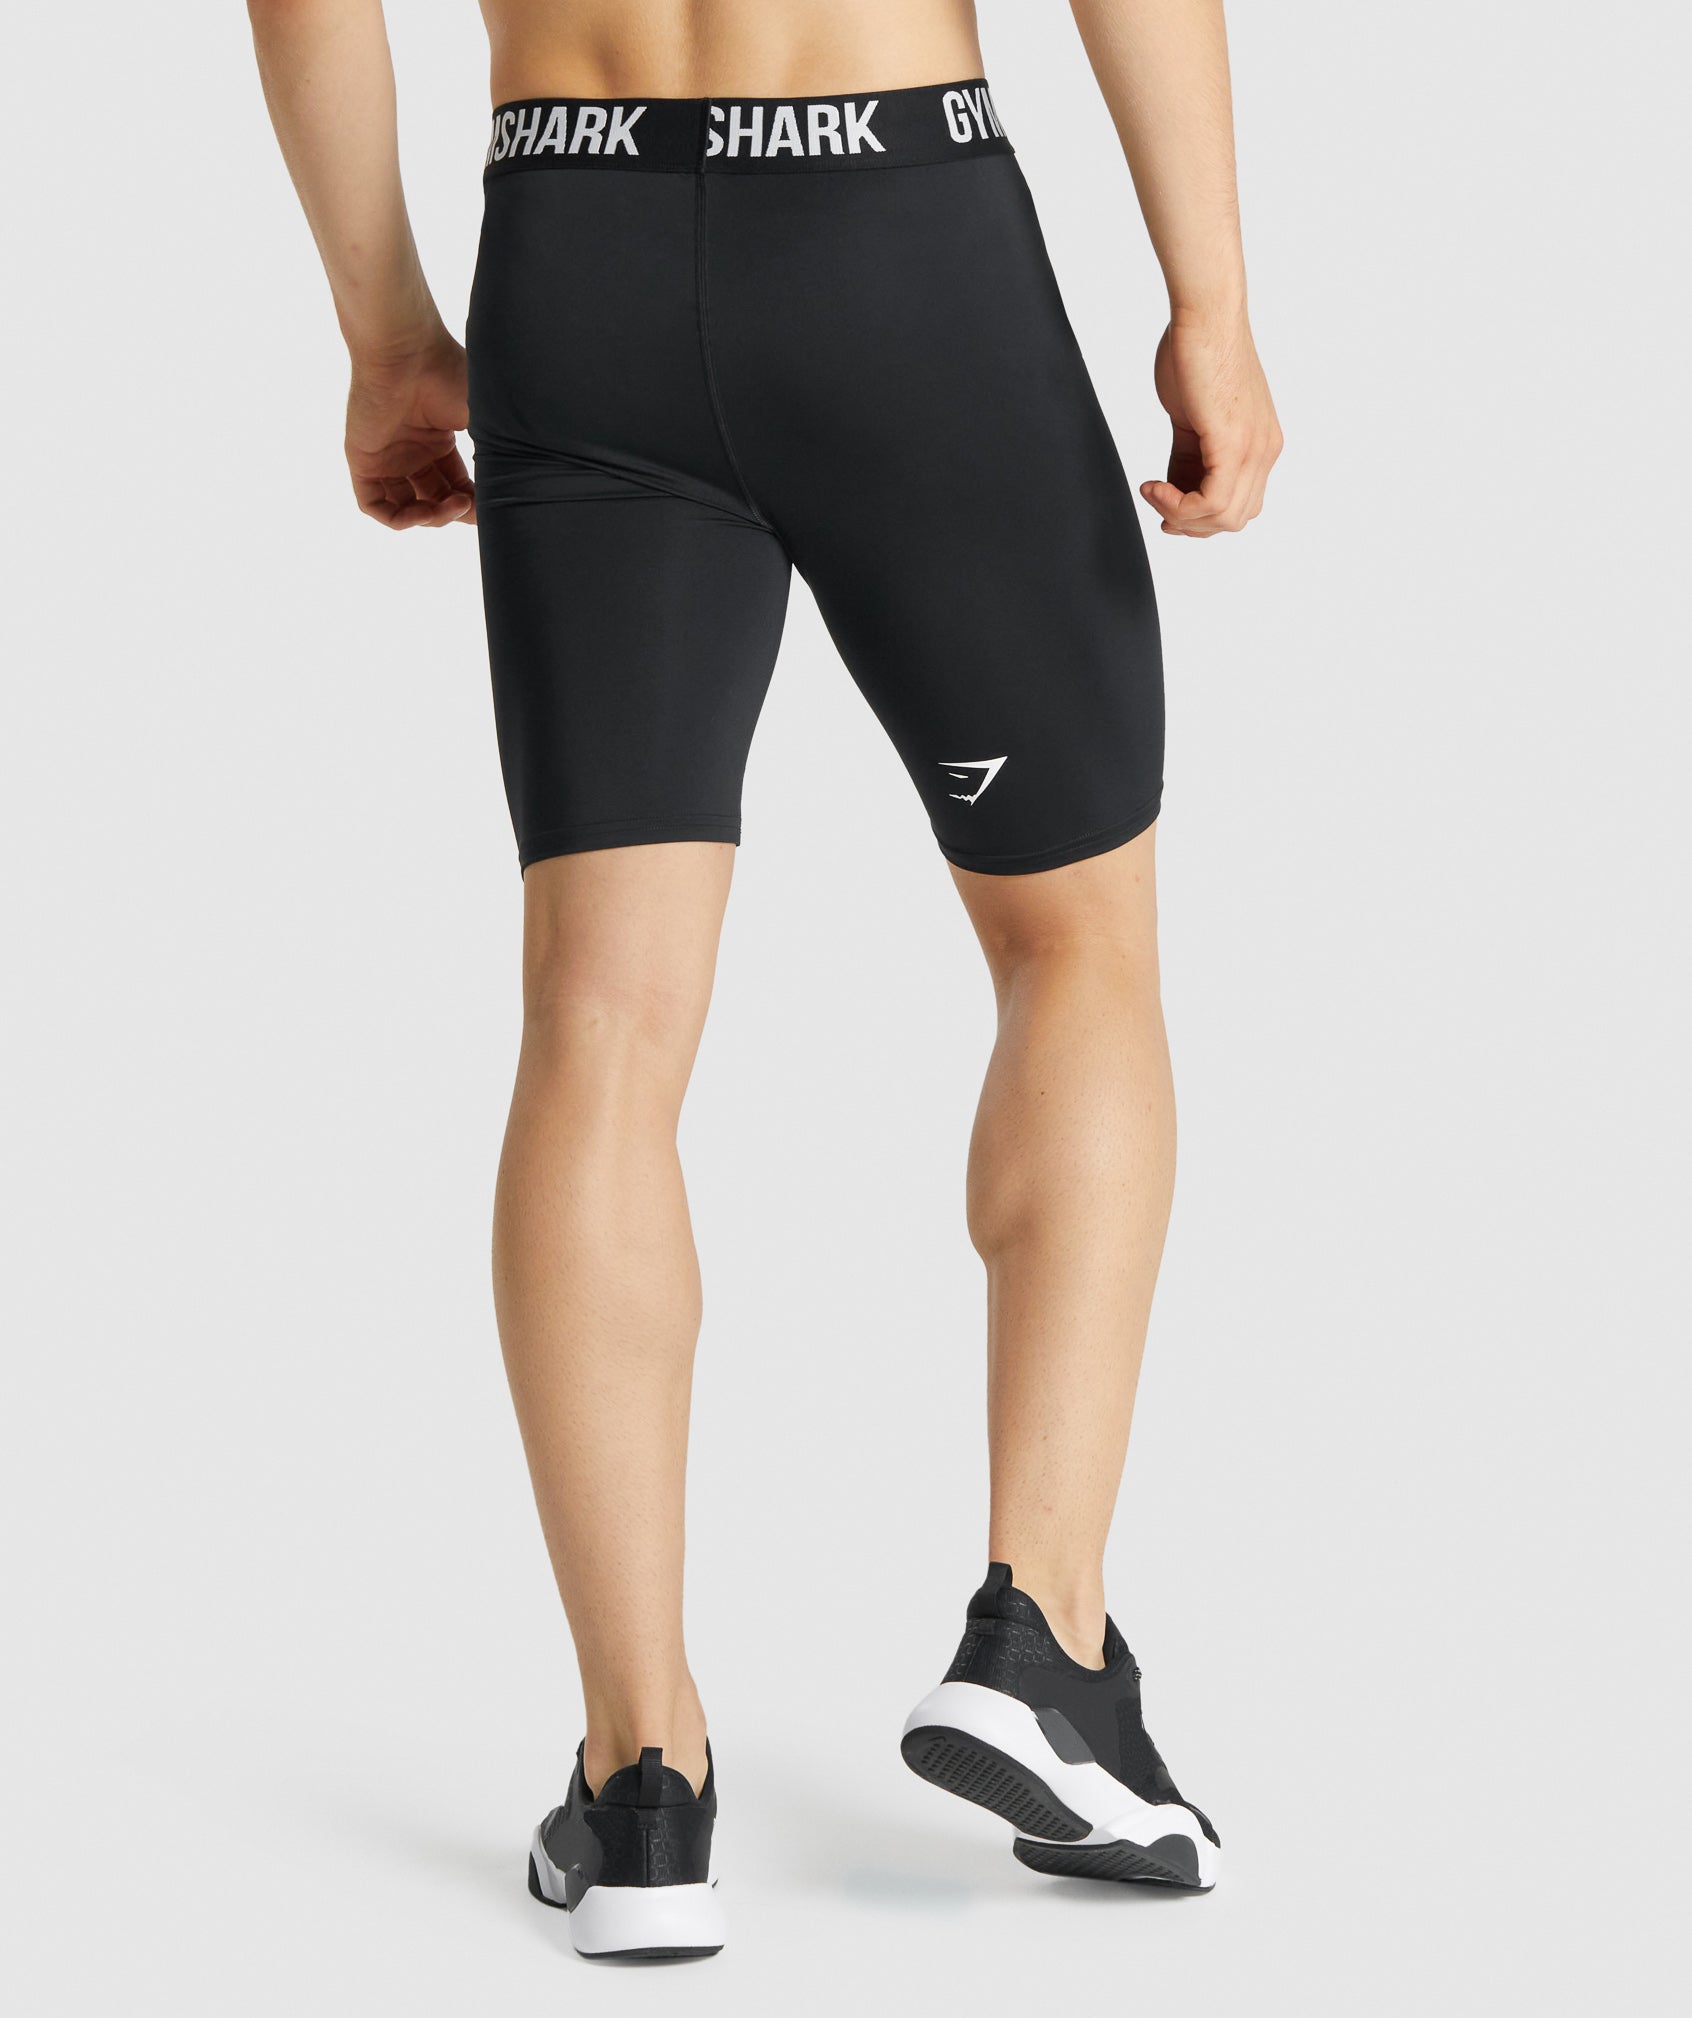 Men Compression Shorts Brief Skin Base Layer Tight Gym Under Pants